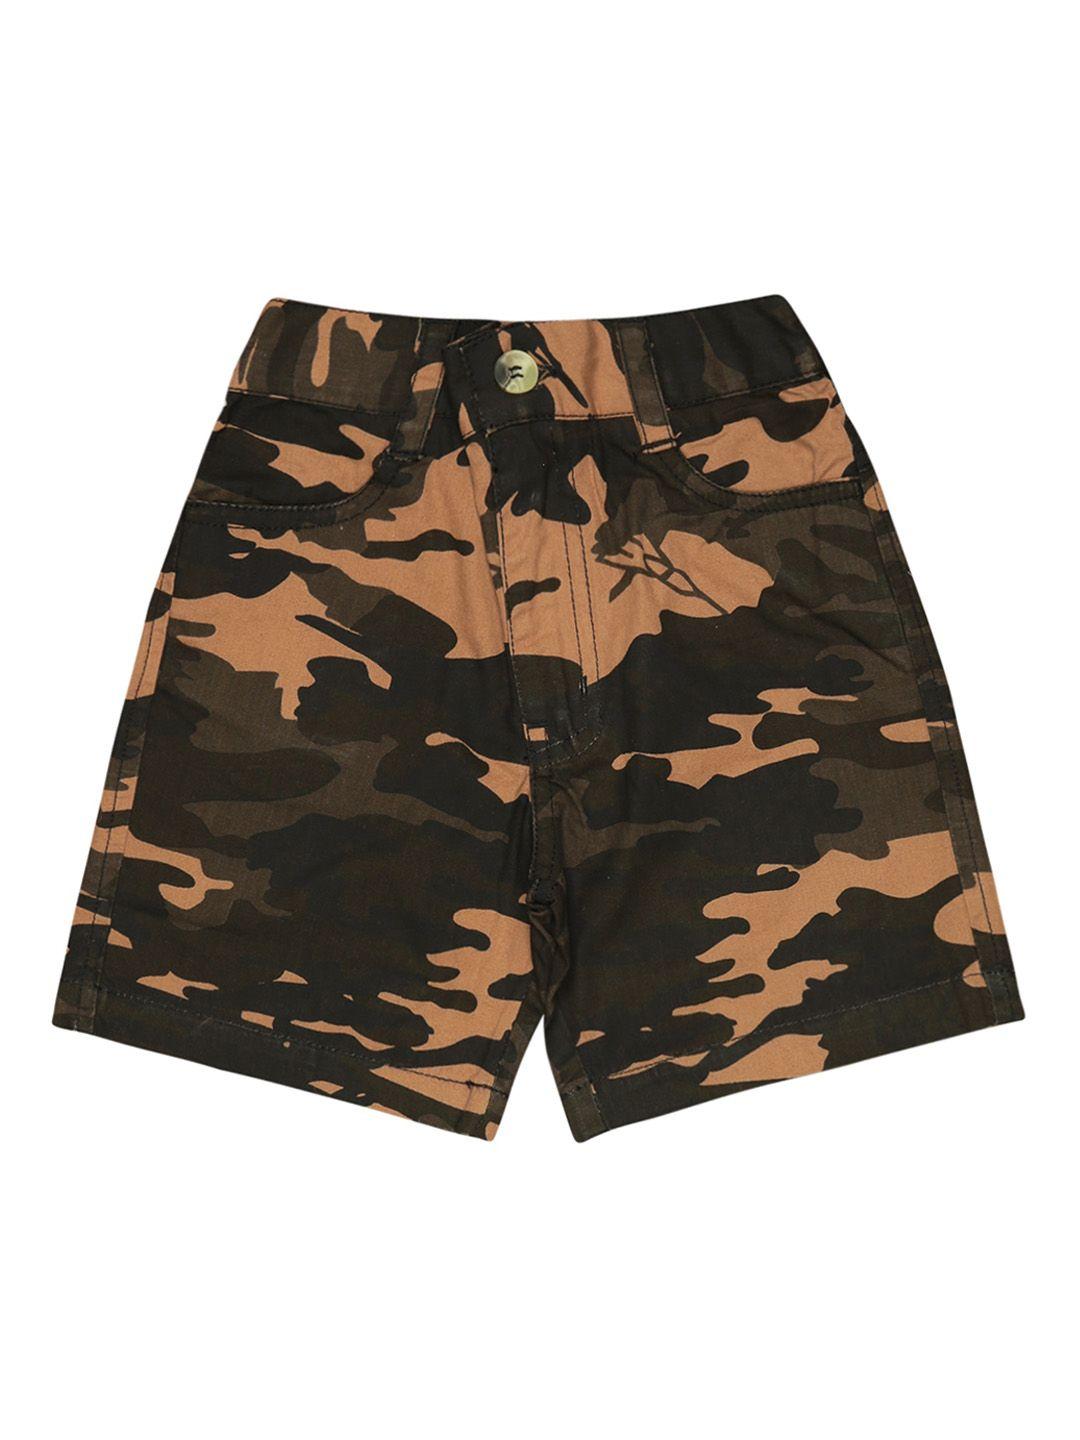 bodycare kids boys camouflage printed shorts